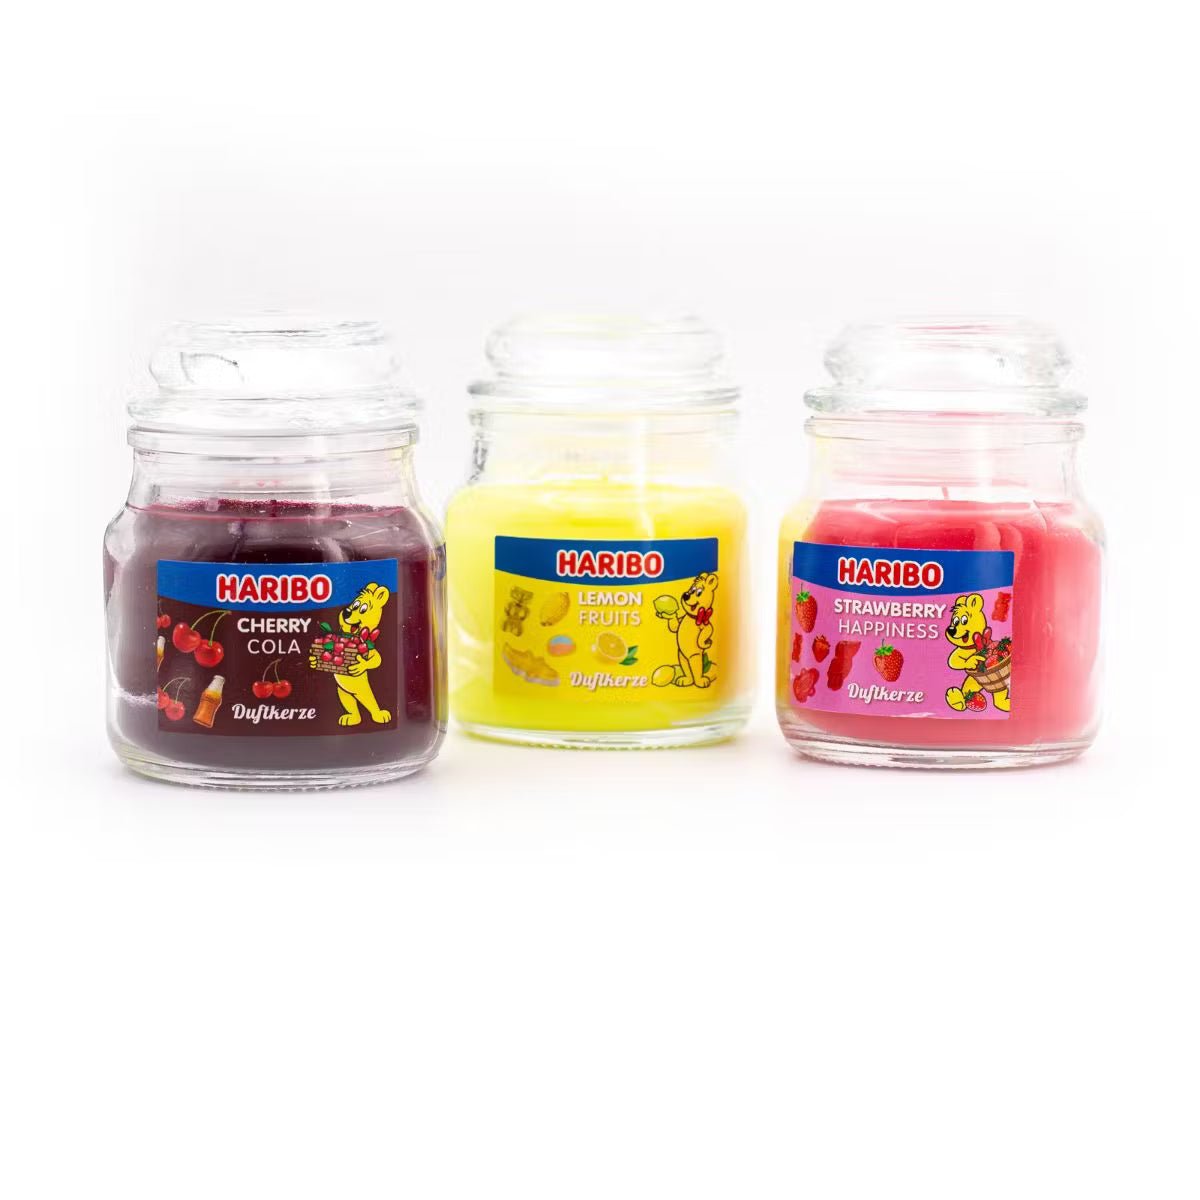 Set 3 candele haribo Lemon Fruits, Cherry Cola, Strawberry Happiness - 3 x 85g - Miele Profumi Collection